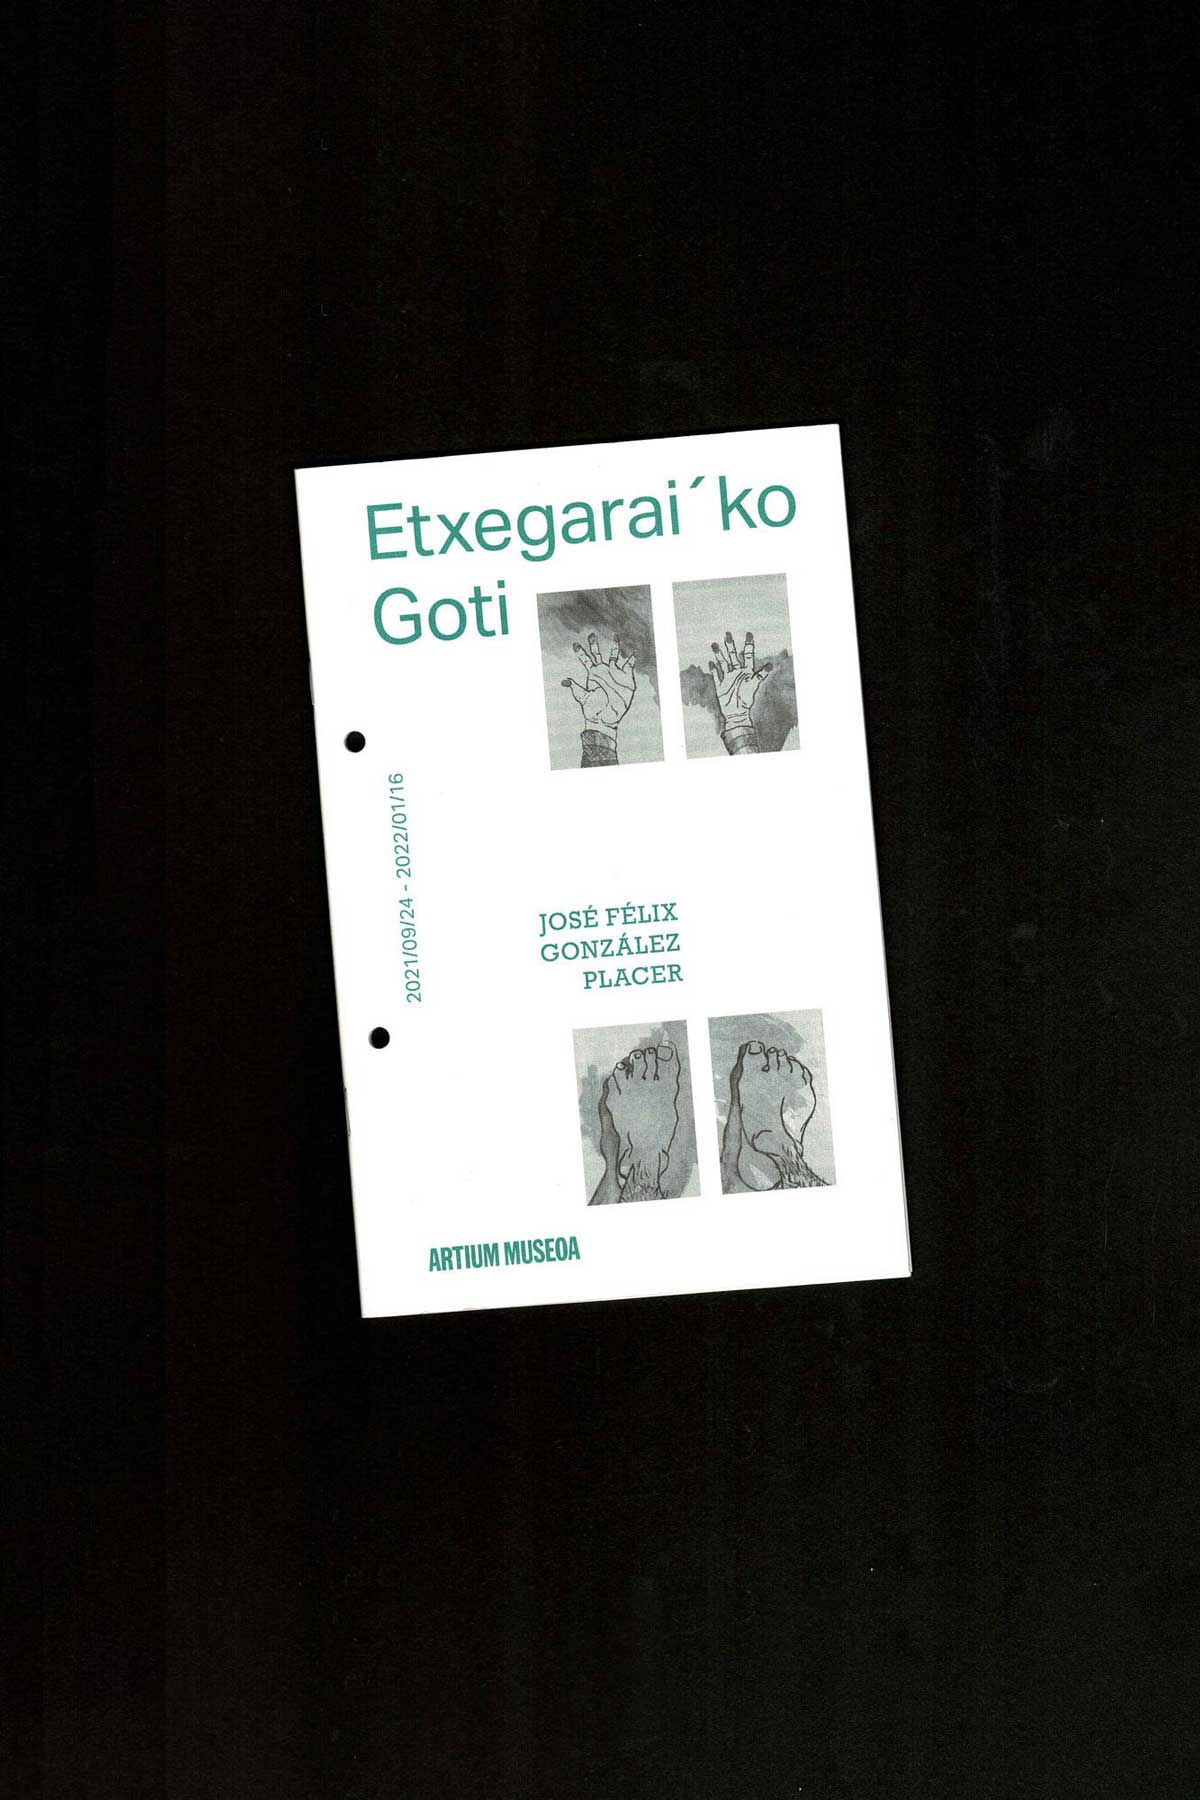 Escaneo de la portada del folleto de la exposición Etxegarai'ko Goti.